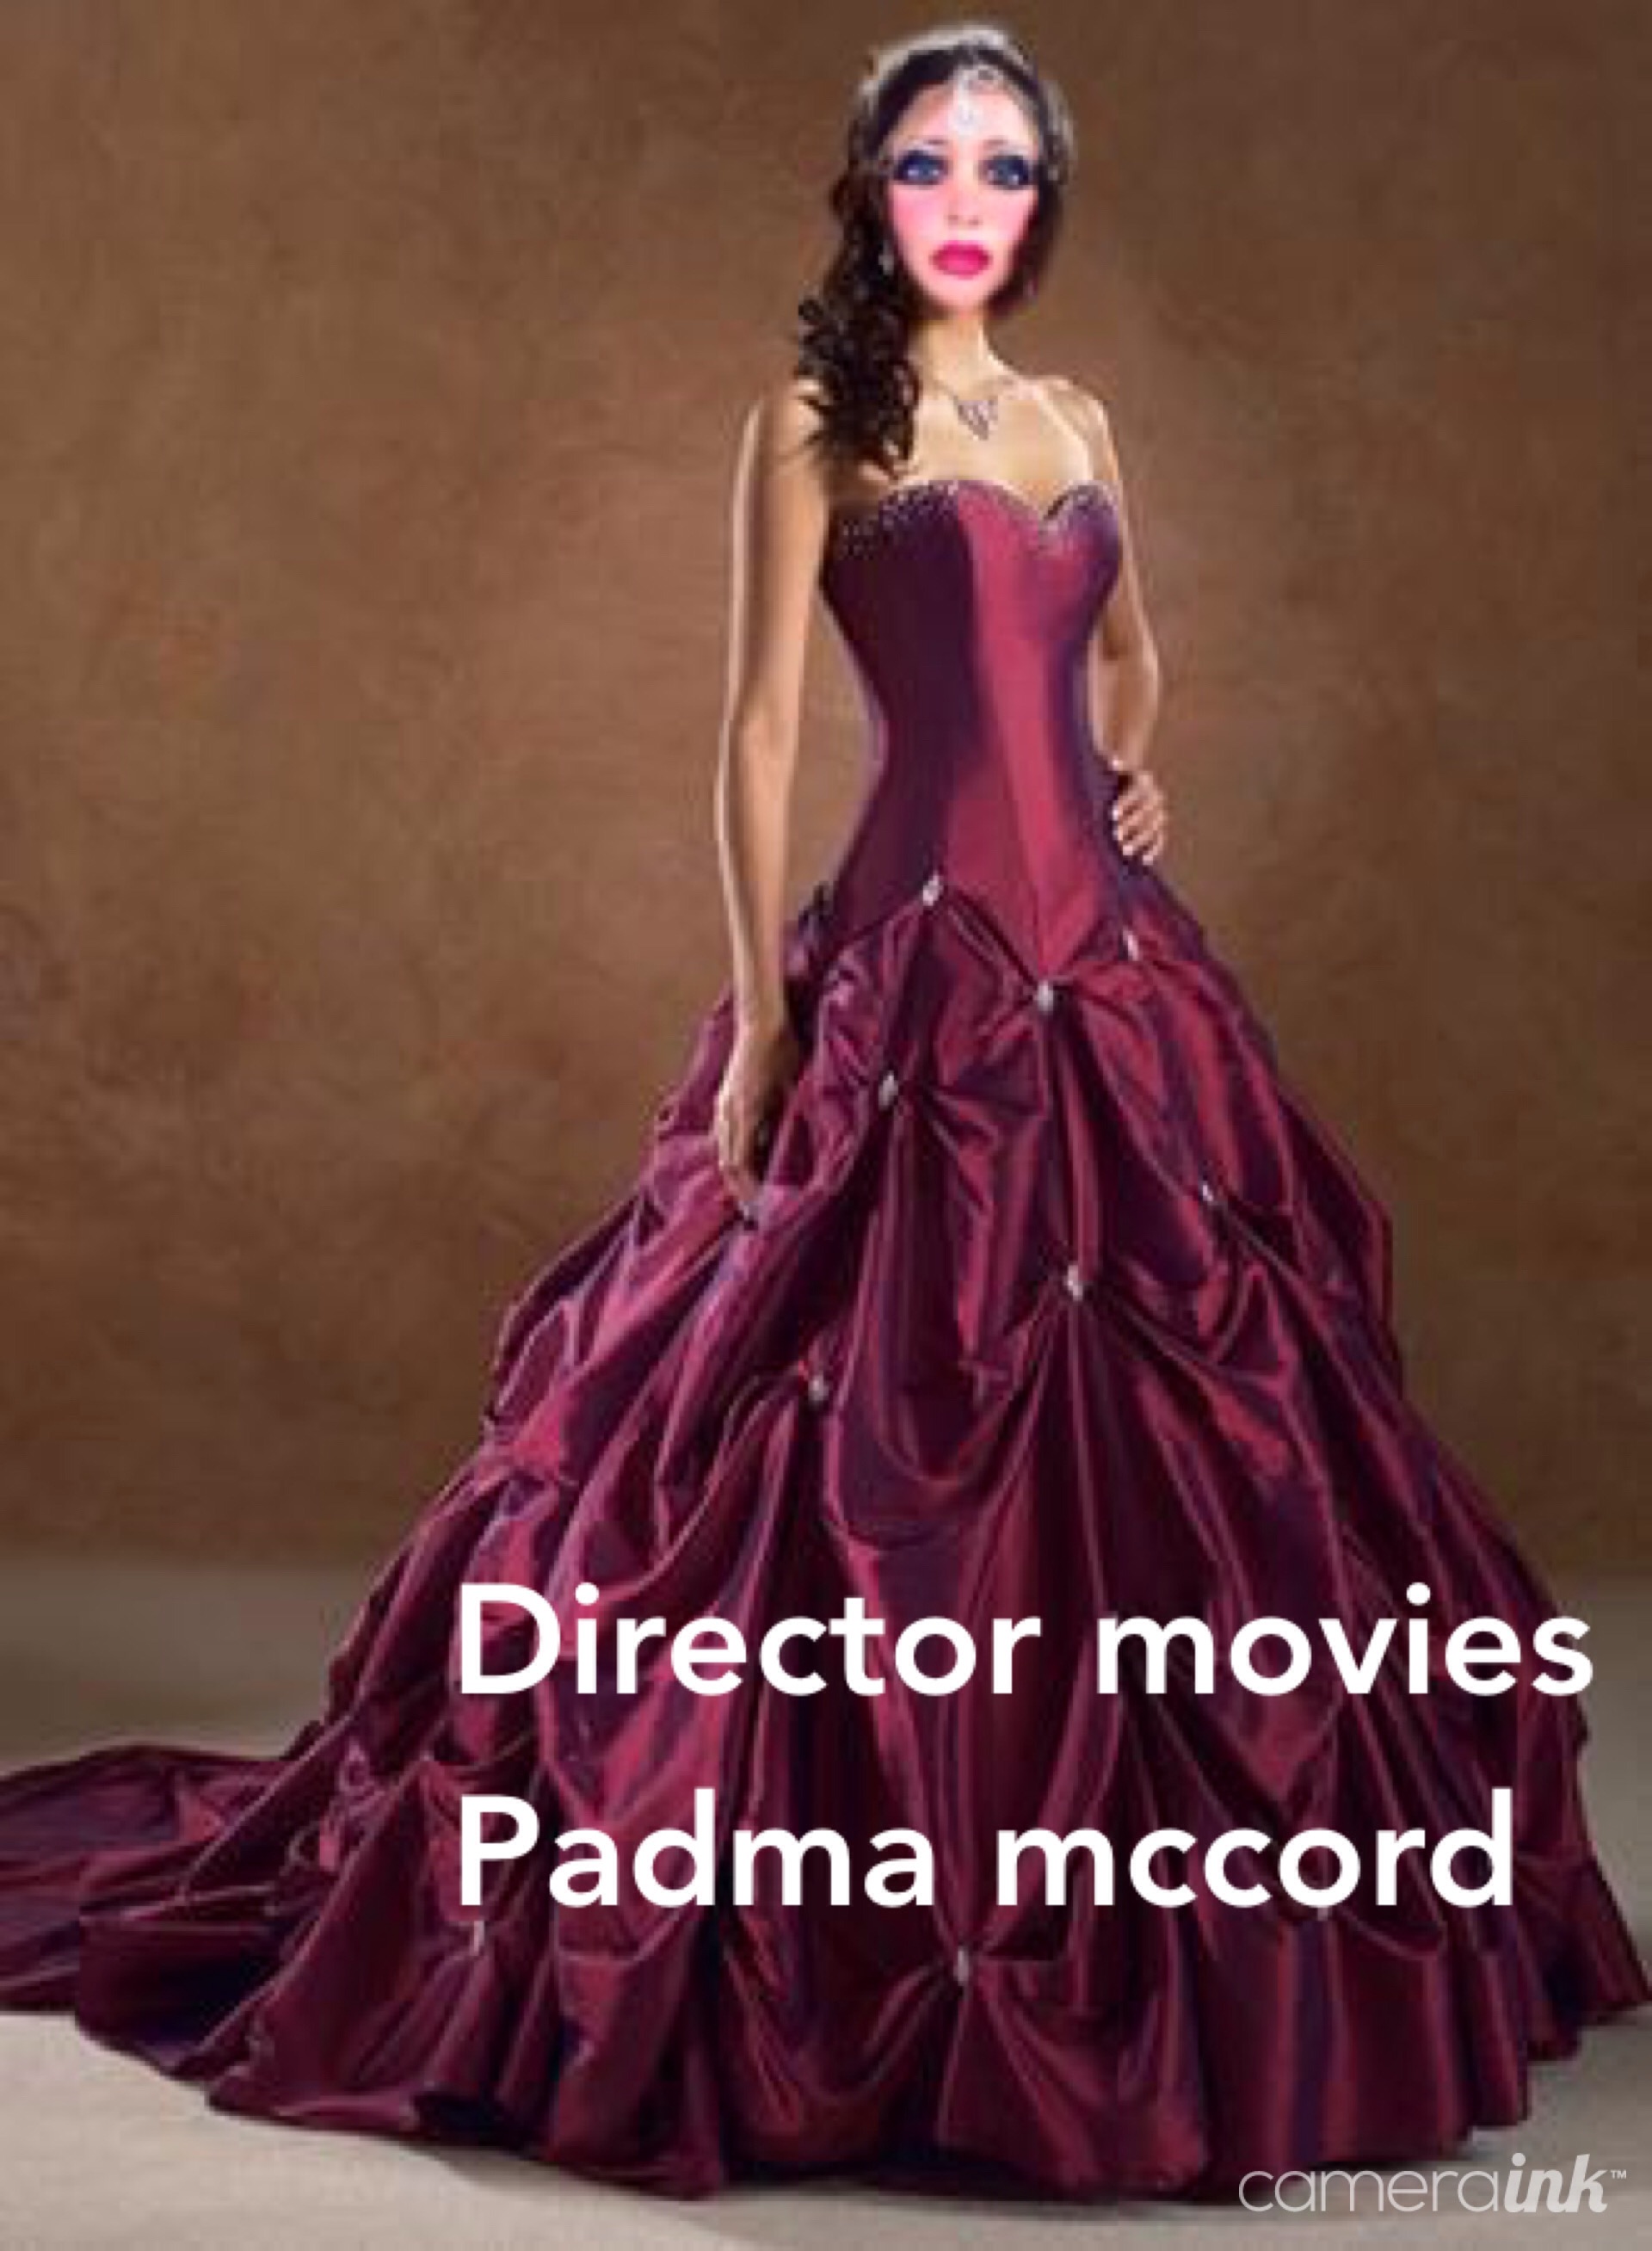 Padma mccord, Padma g mccord, Director films movies Executive Producer Padma mccord, President Padma mccord owner of the company Padma mccord Enterprises llc,